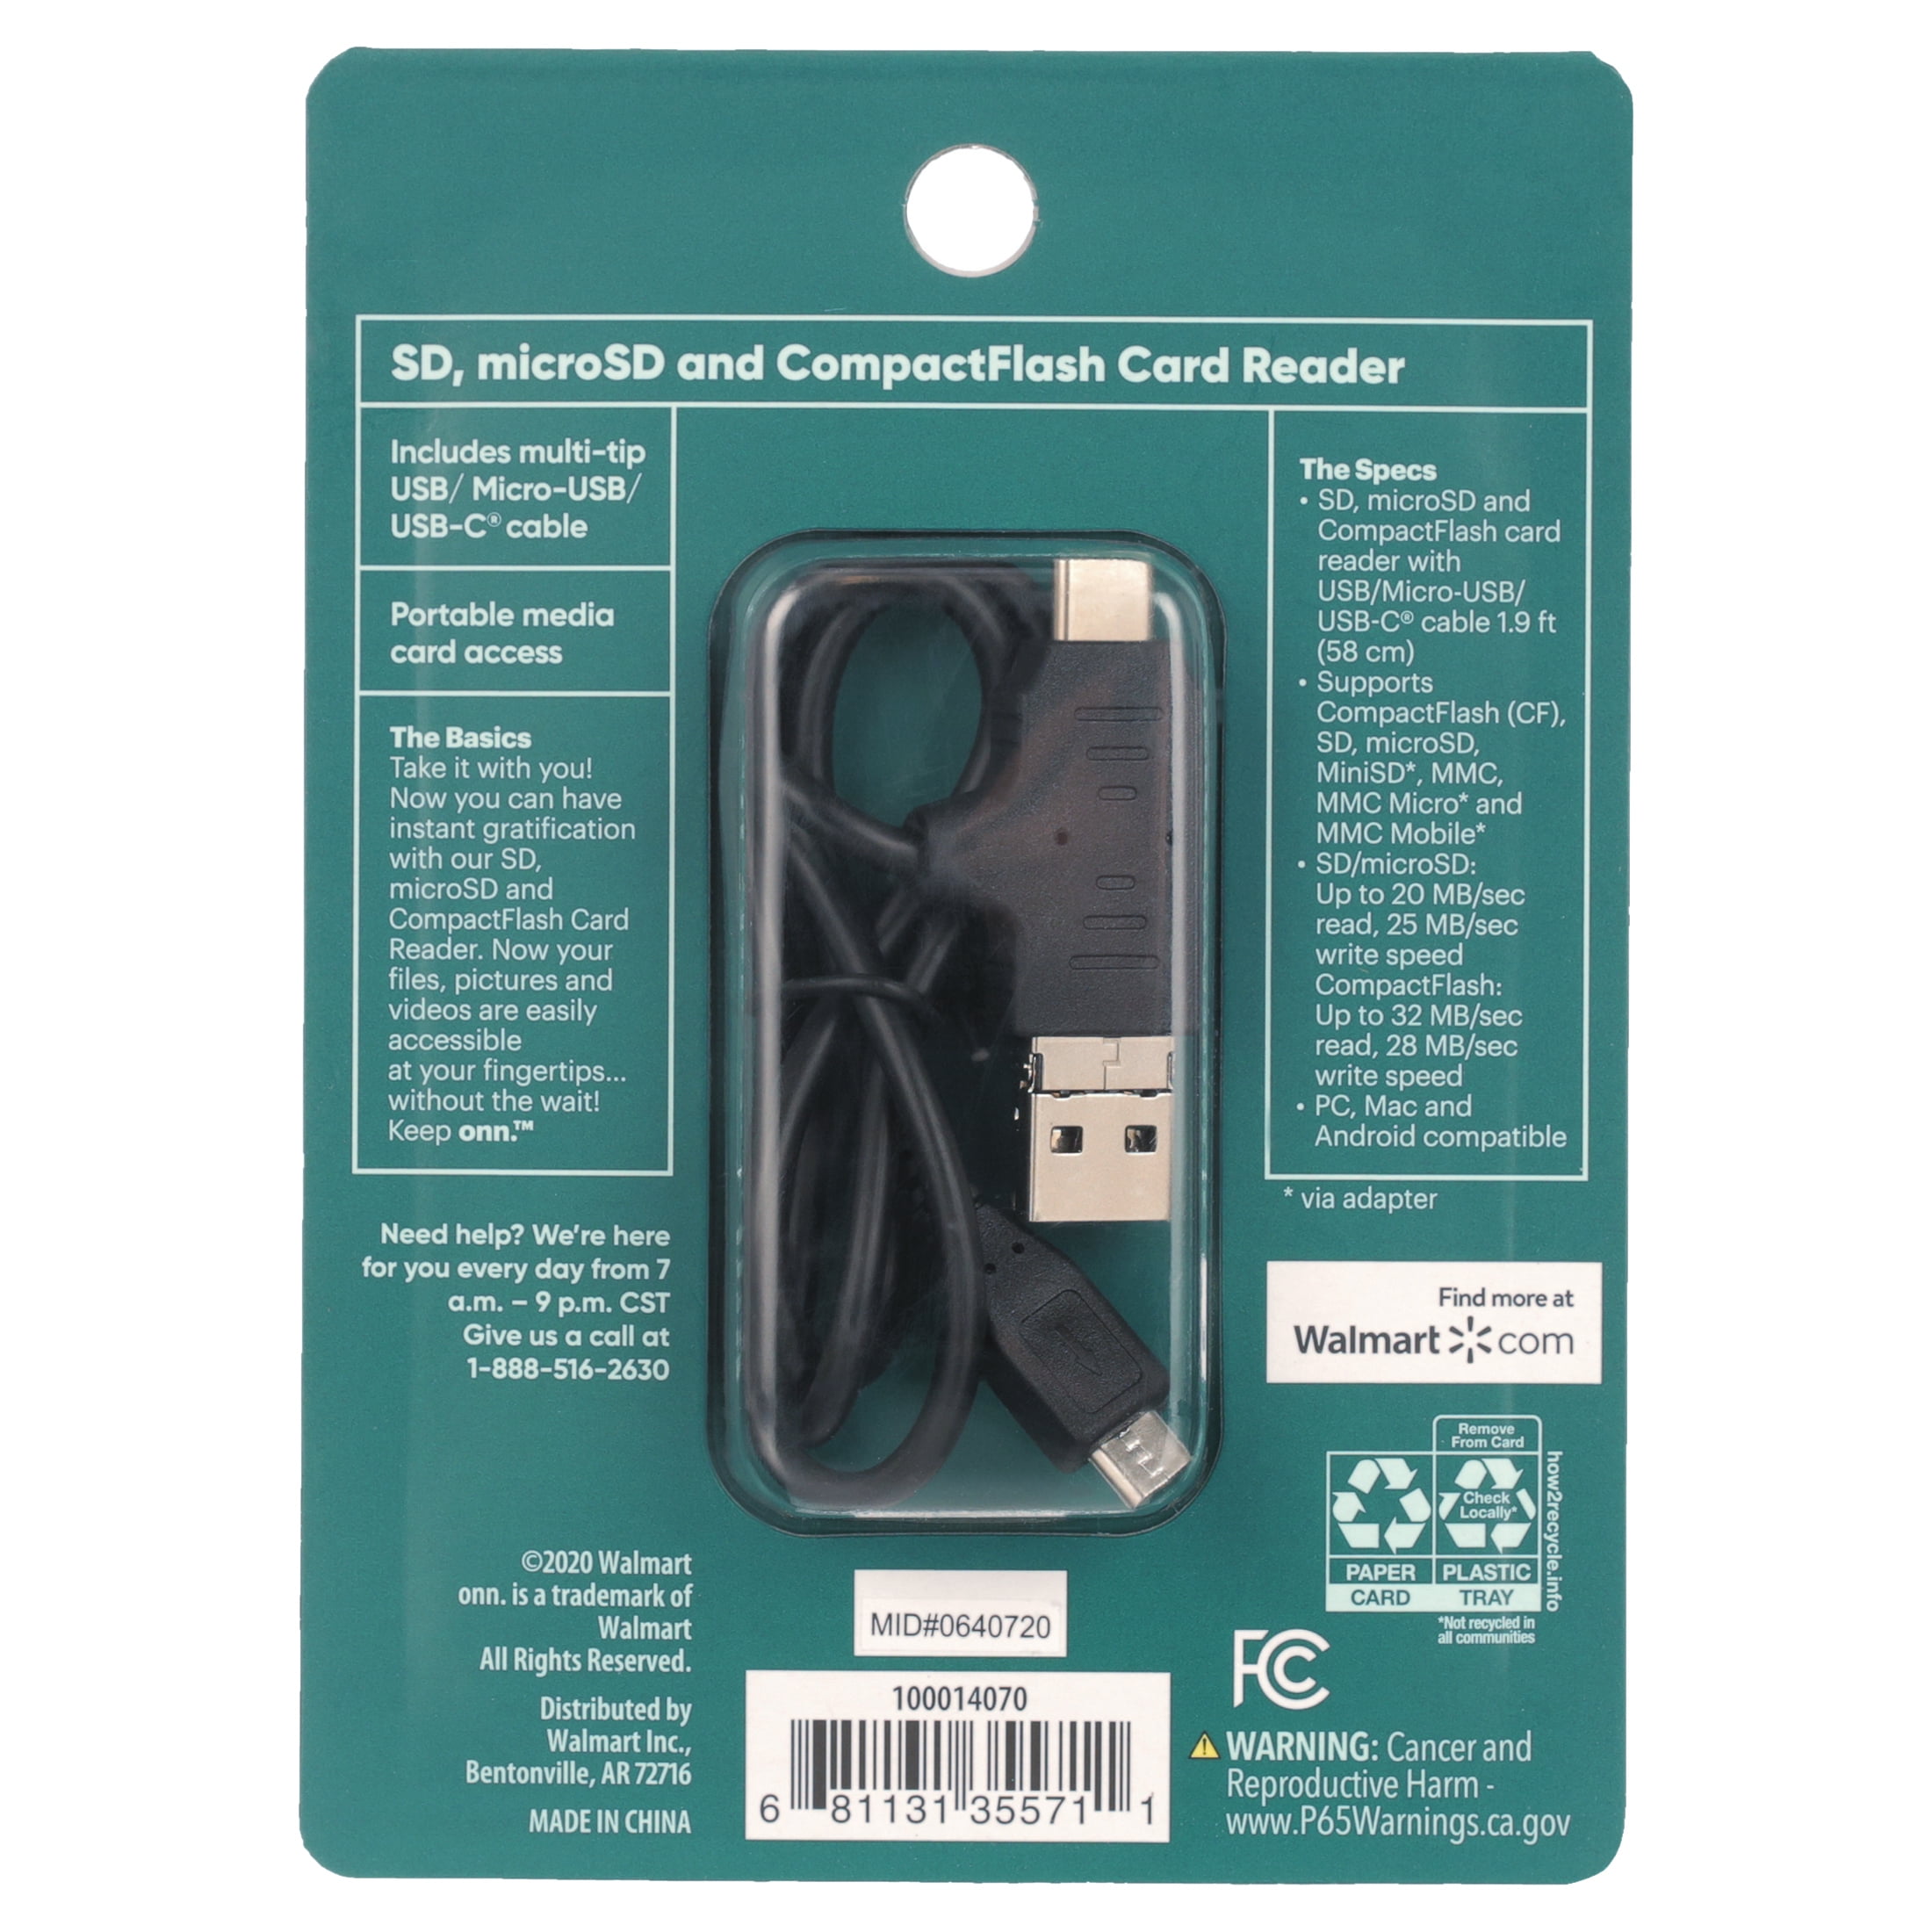 onn. SD, microSD and CompactFlash Card Reader